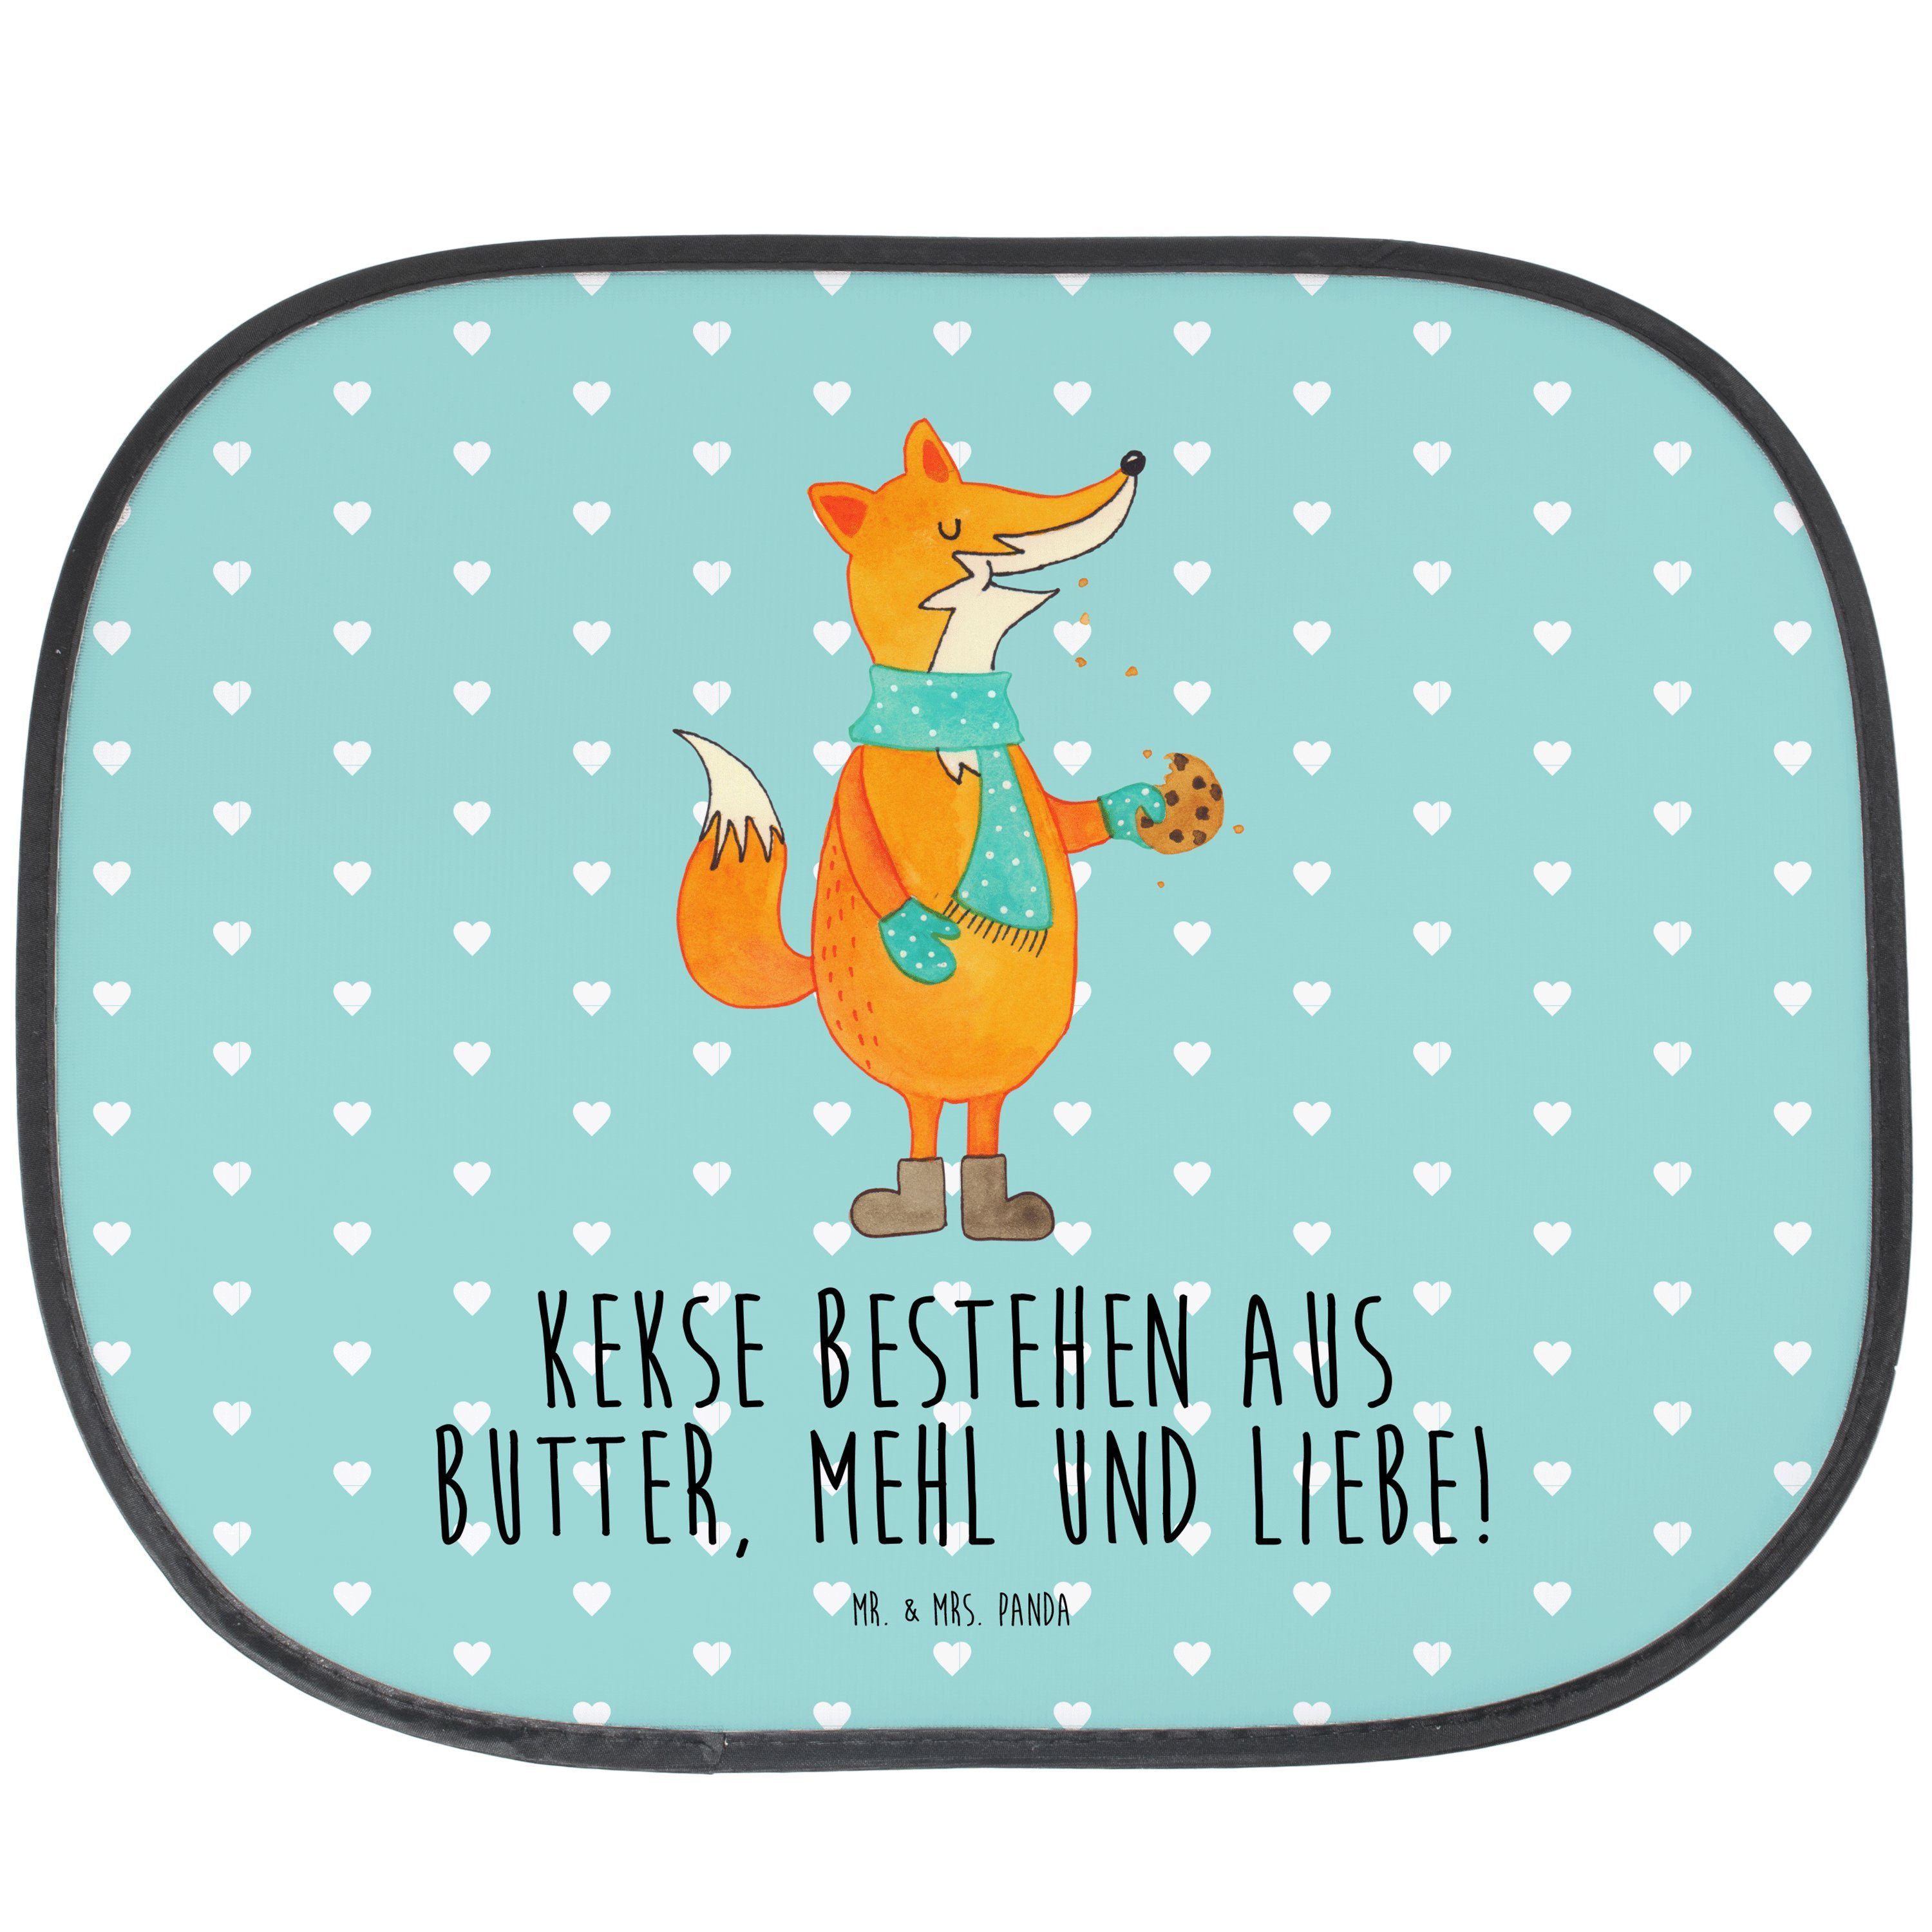 Mr. Liebe, Mrs. - Pastell Weihnachtsliebe, Geschenk, Türkis Seidenmatt Fuchs Panda, frier, & Sonnenschutz Keks -